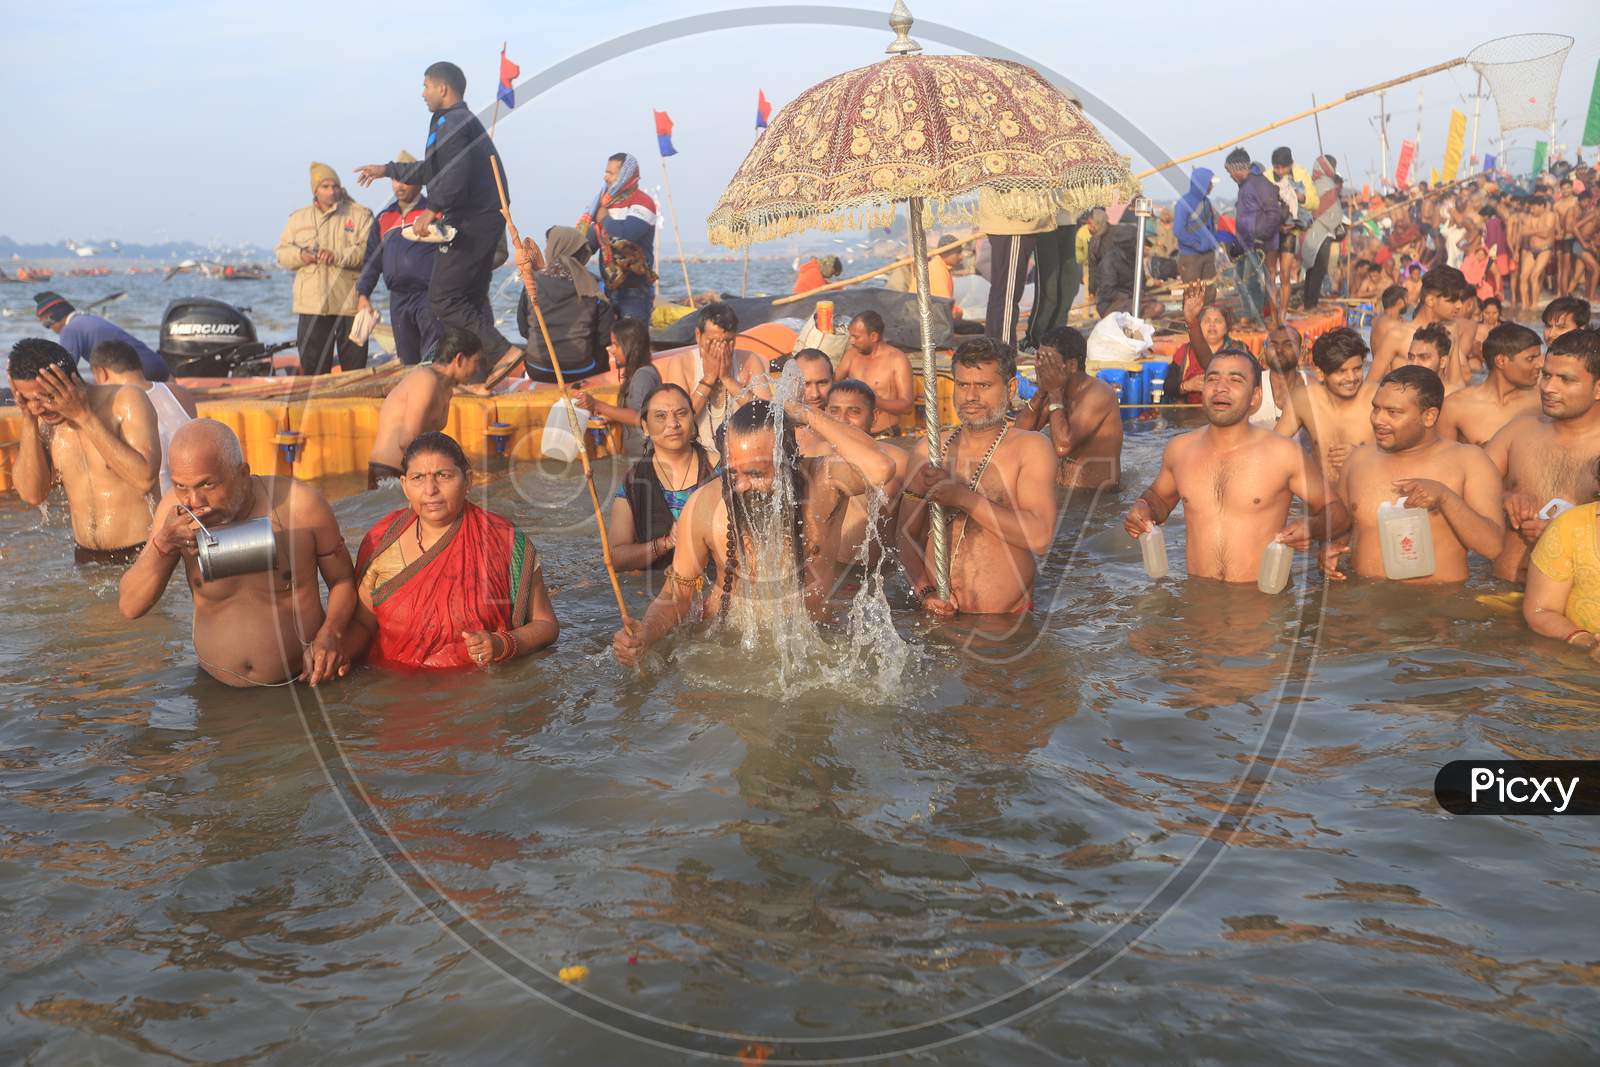 Crowd Of Hindu Devotees  And Sadhu  Taking Holy Bath In Triveni Sangam River At  Prayagraj  During  Magh Mela 2020 in Allahabad